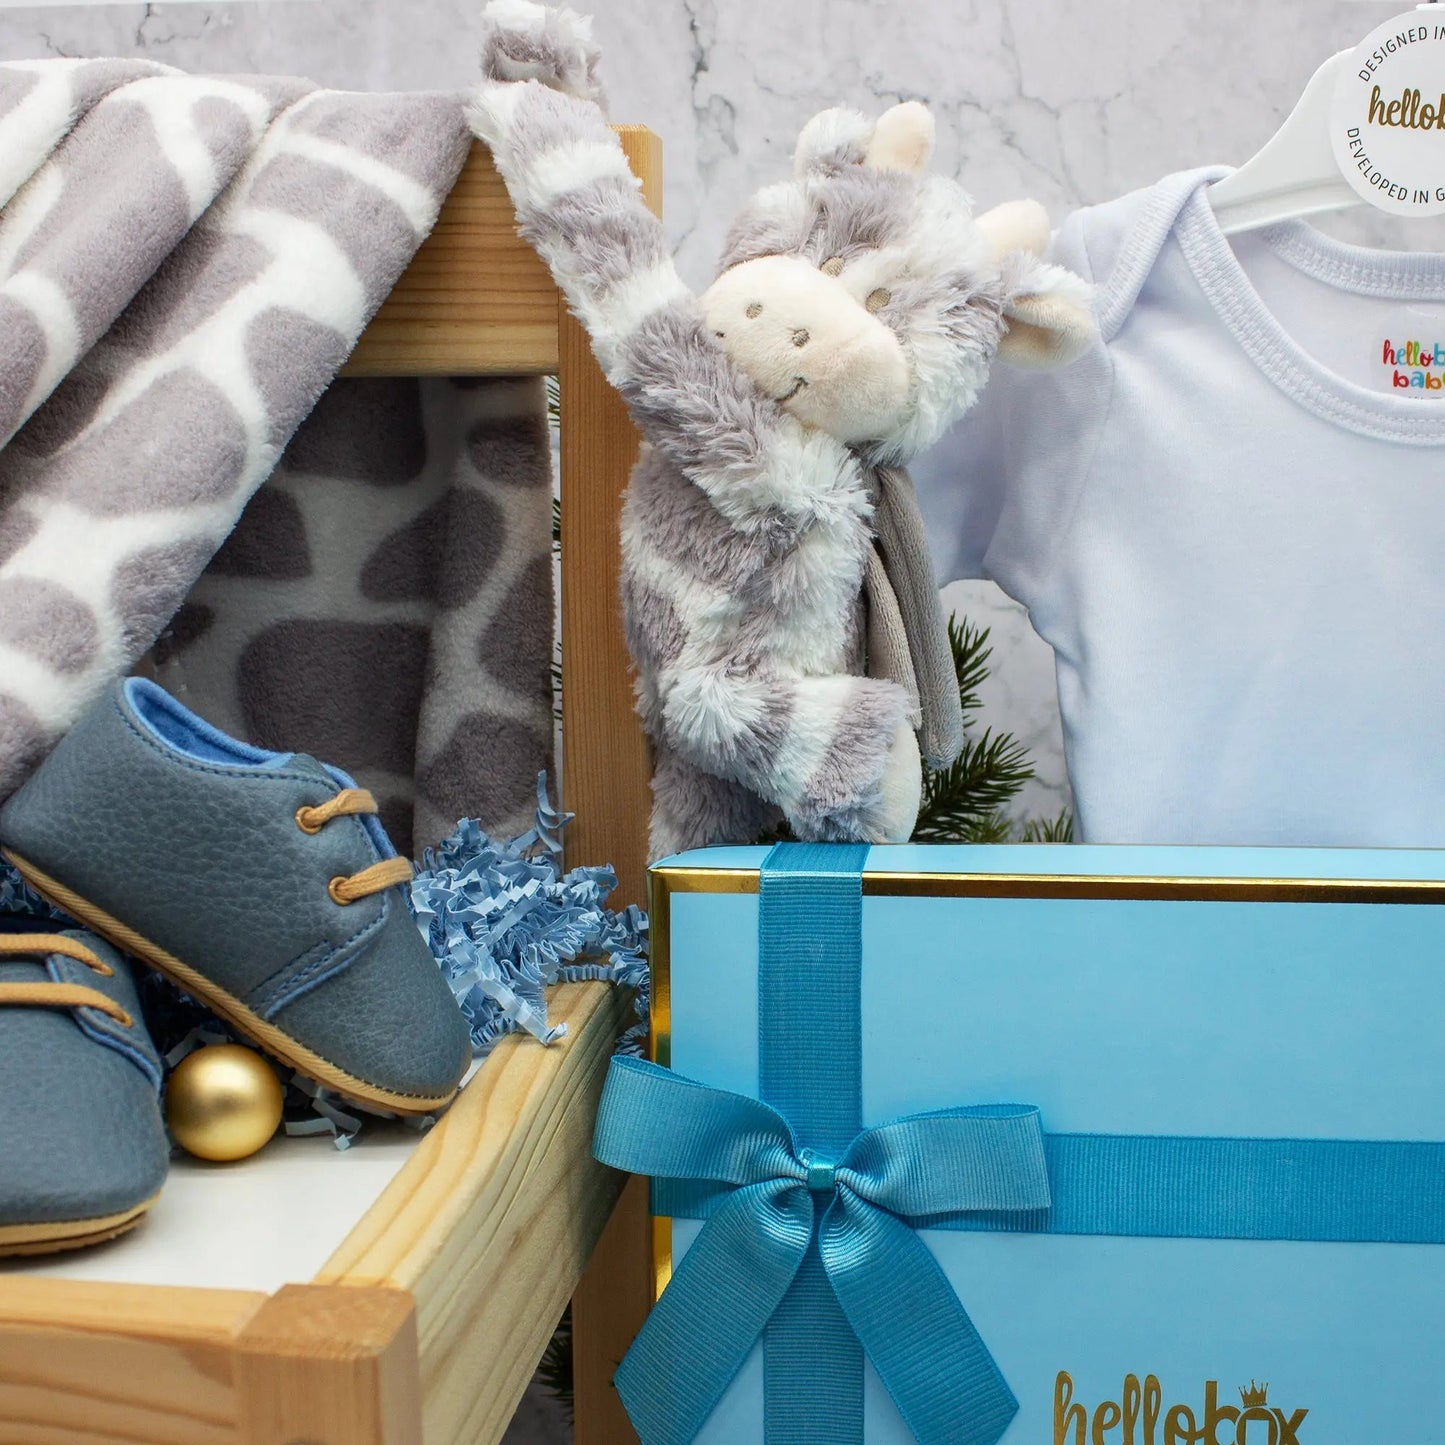 HelloBox! 4pc Infant Gift Set (Blue)